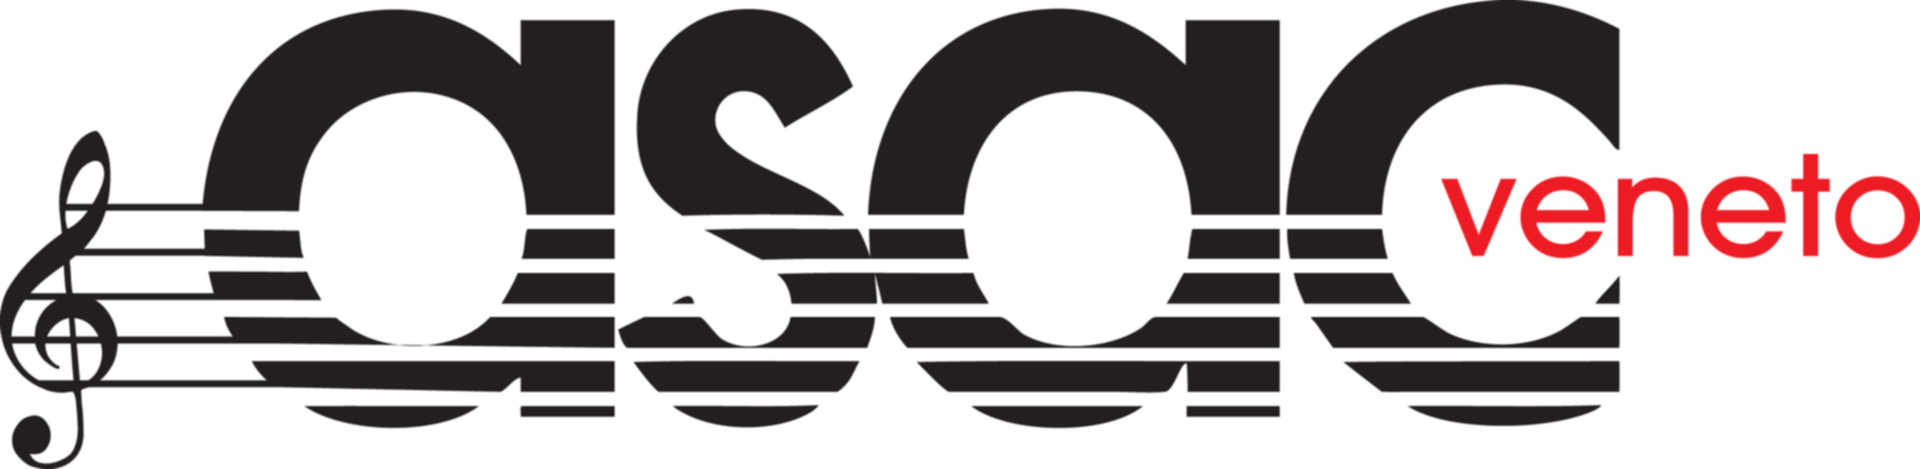 ASAC-logo.jpg